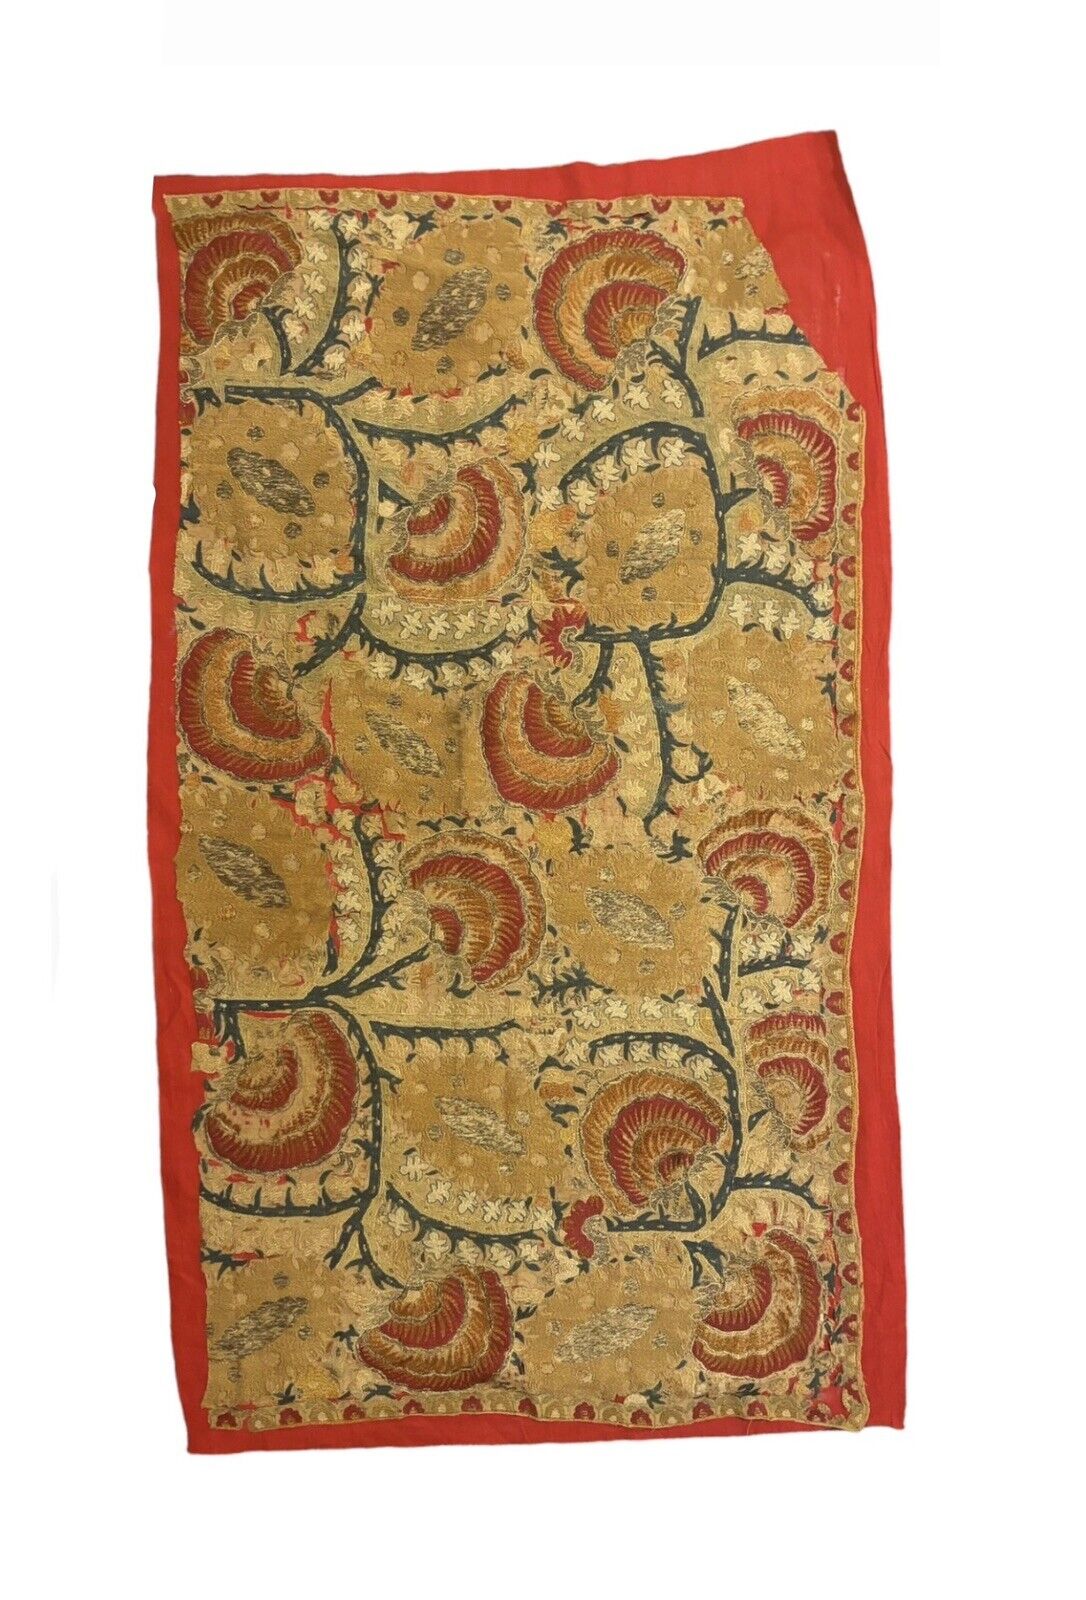 Beautiful Rare 18th Century Turkish Ottoman Embroidery 1749